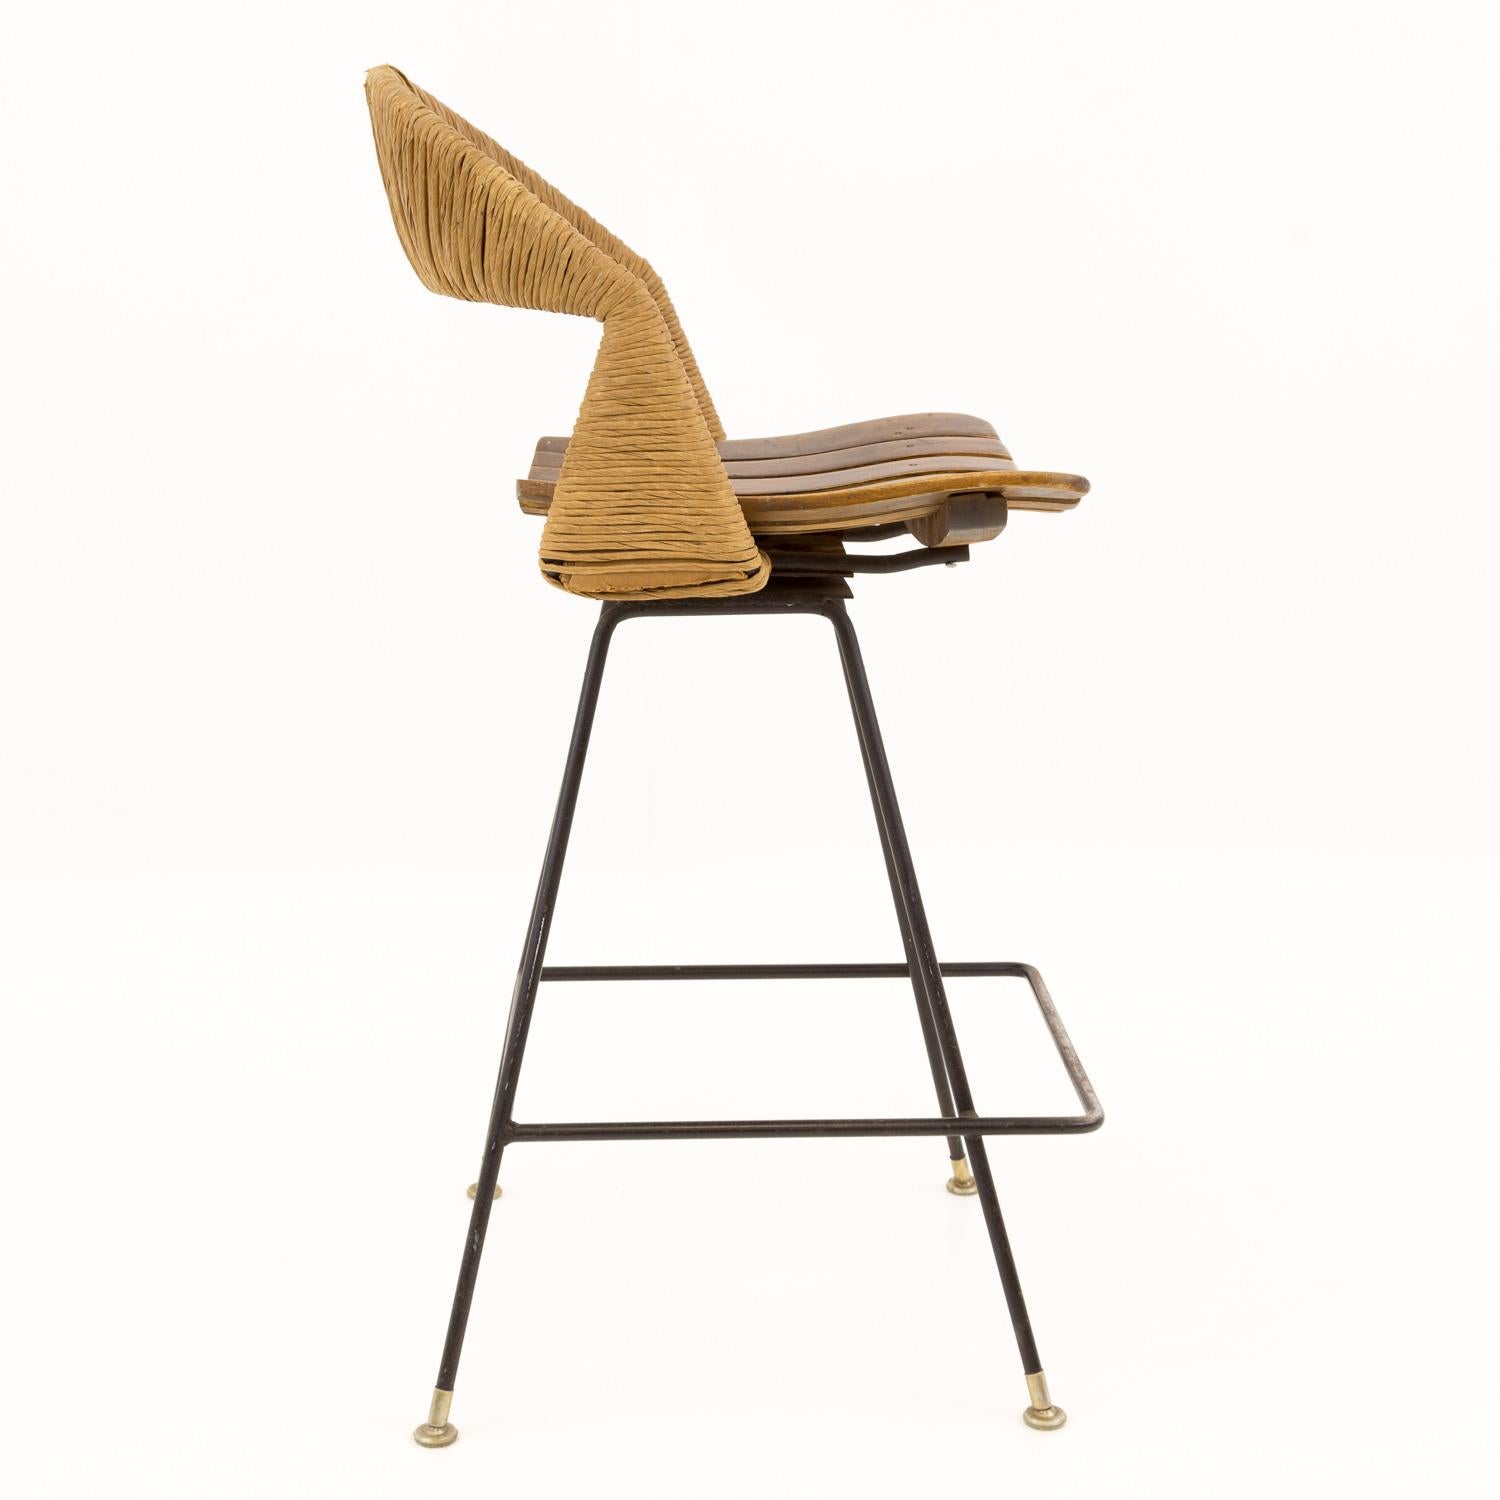 arthur umanoff stools